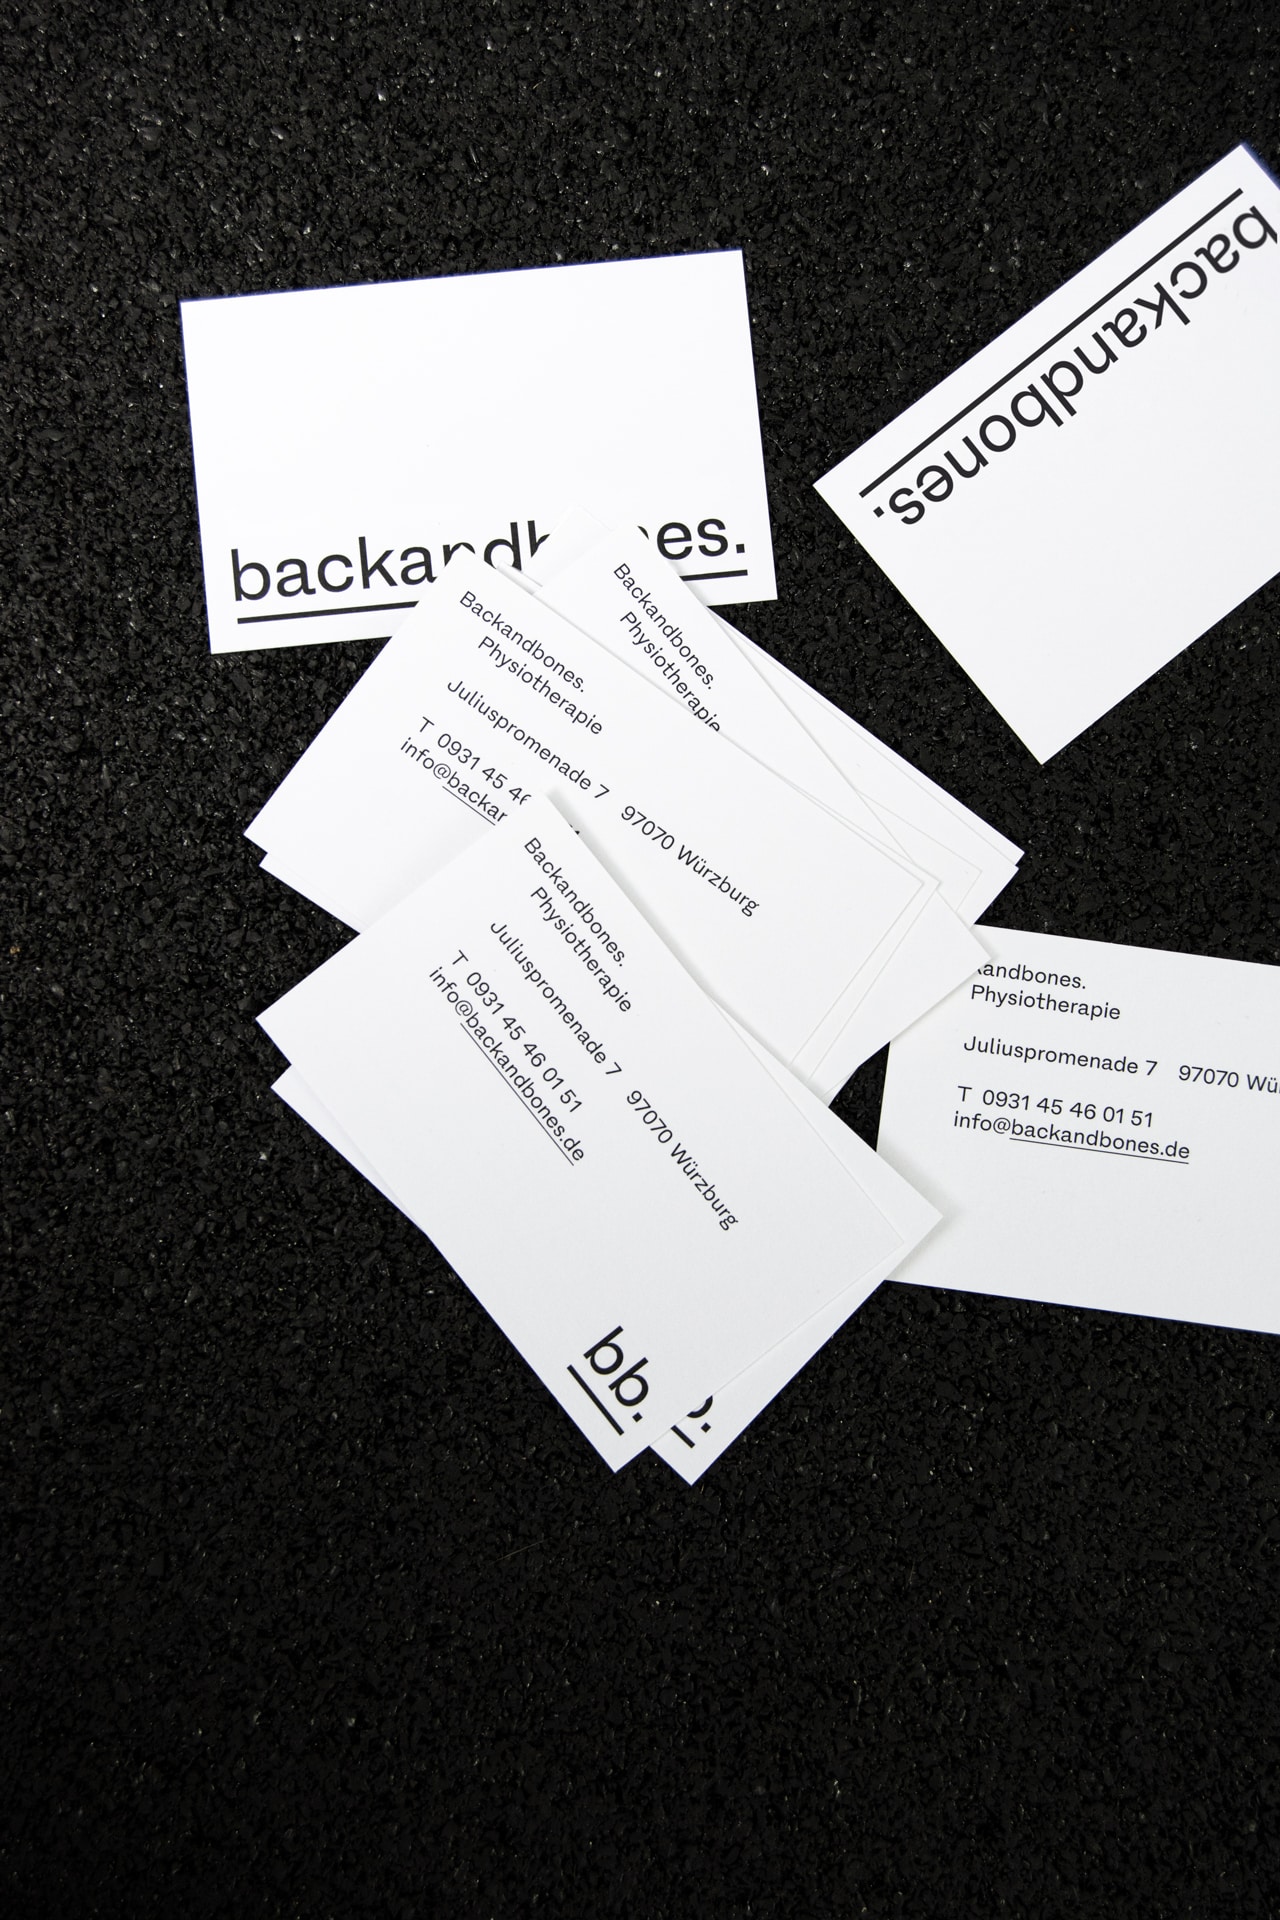 Back and bones Physiotherapie Würzburg, Corporate Design, Logodesign, Visitenkarten